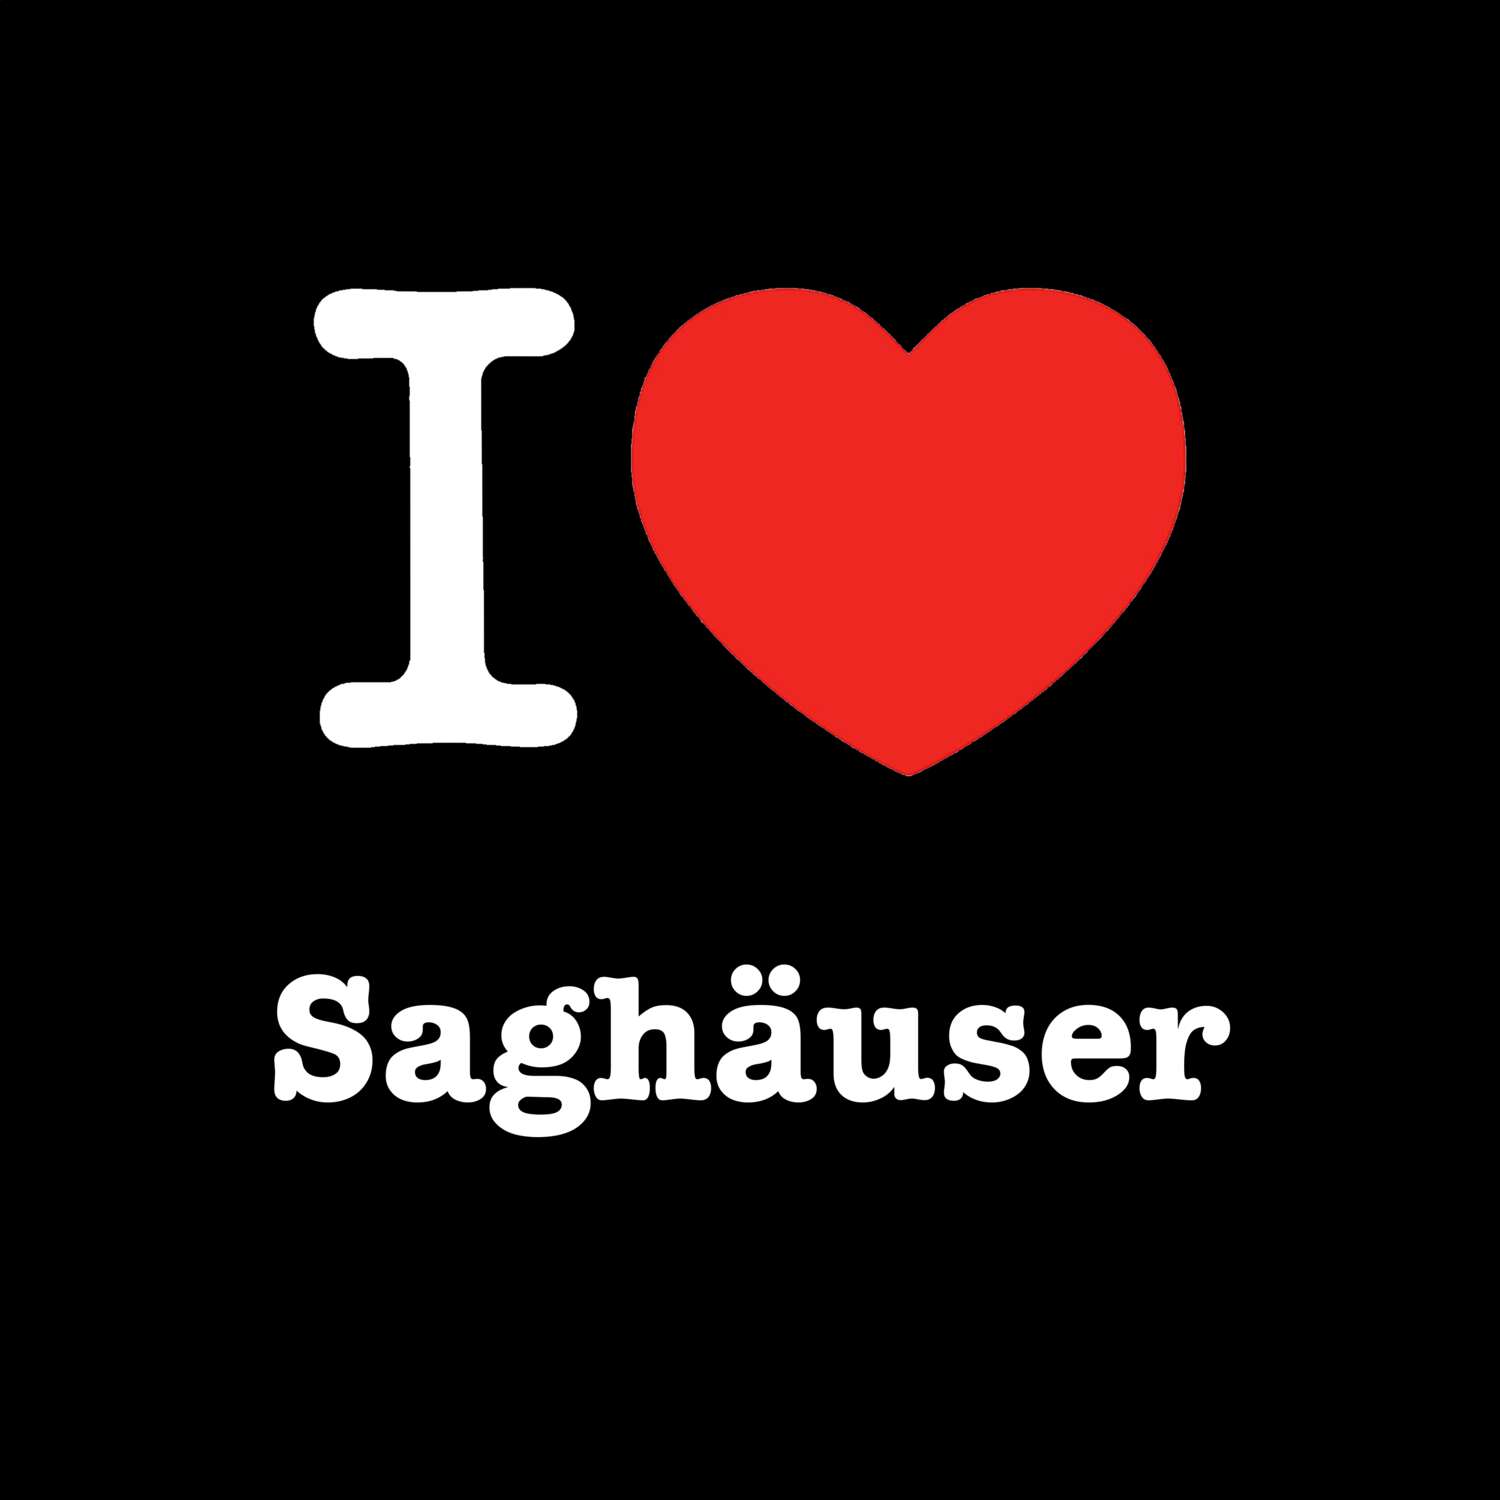 Saghäuser T-Shirt »I love«